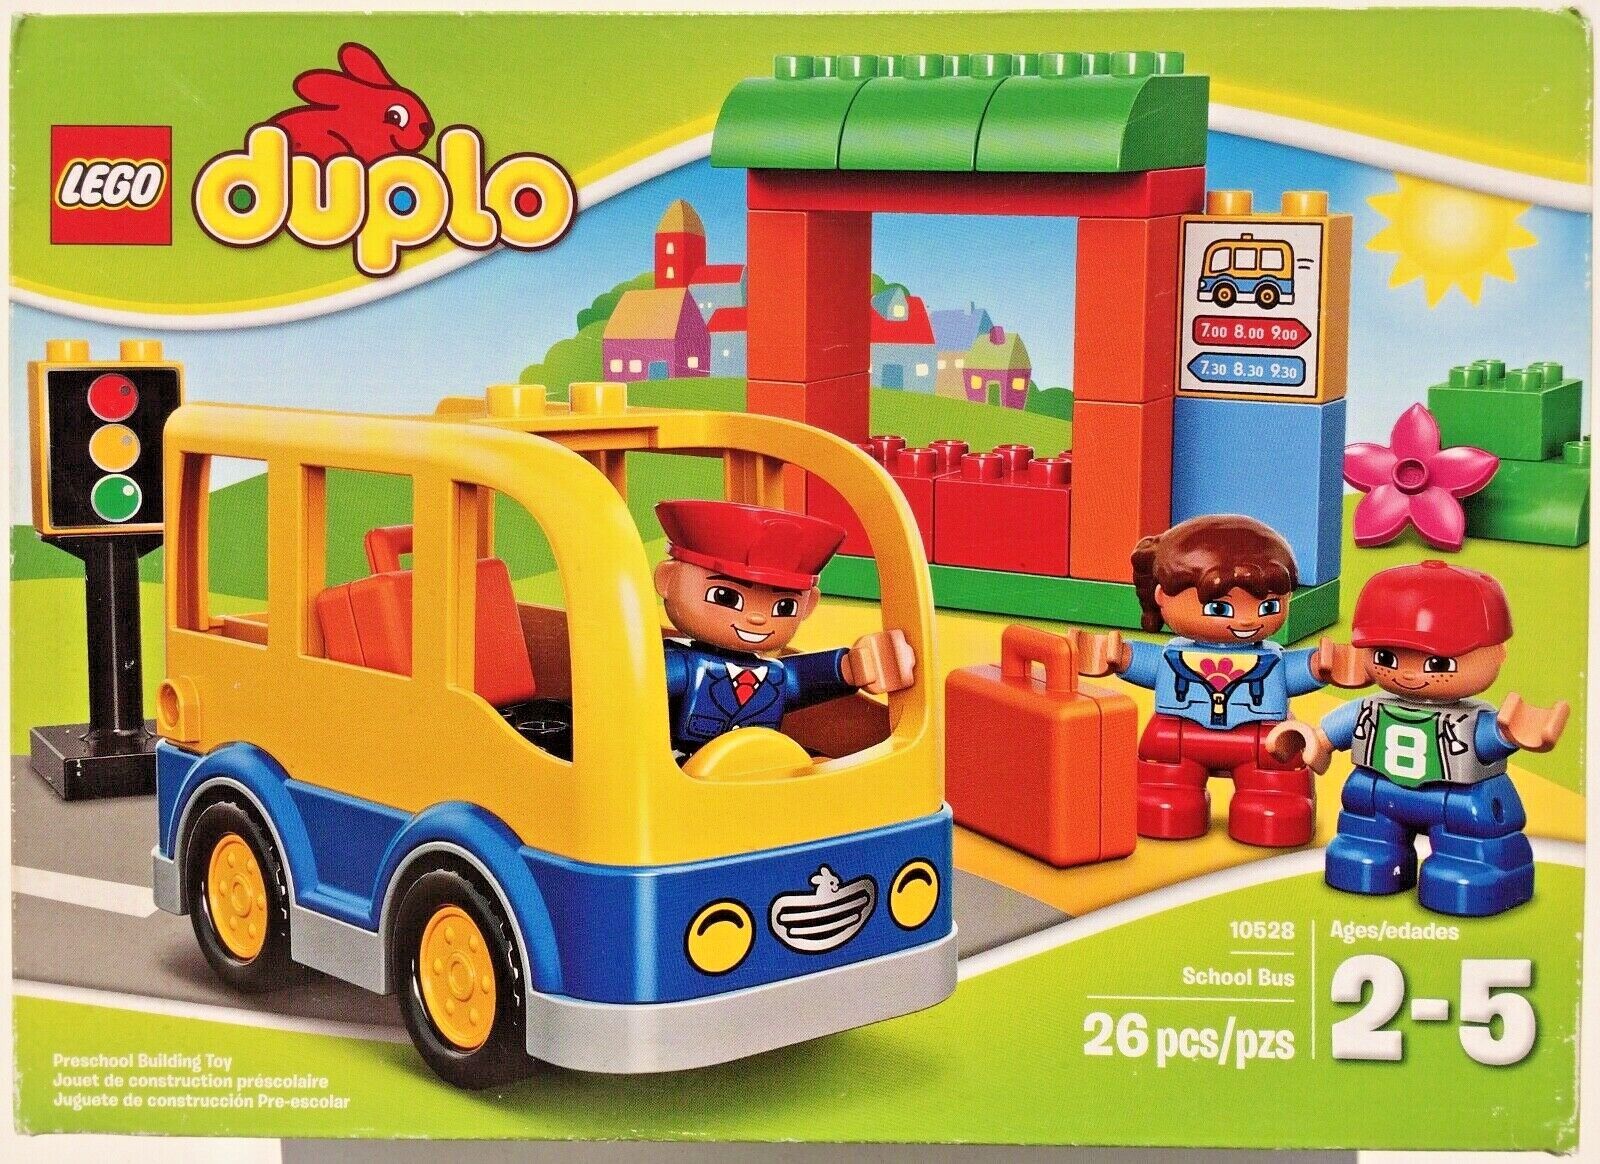 Lego Duplo School Bus Set 10528 ages 2-5  26 Pieces  Factory Sealed w/ shelfwear